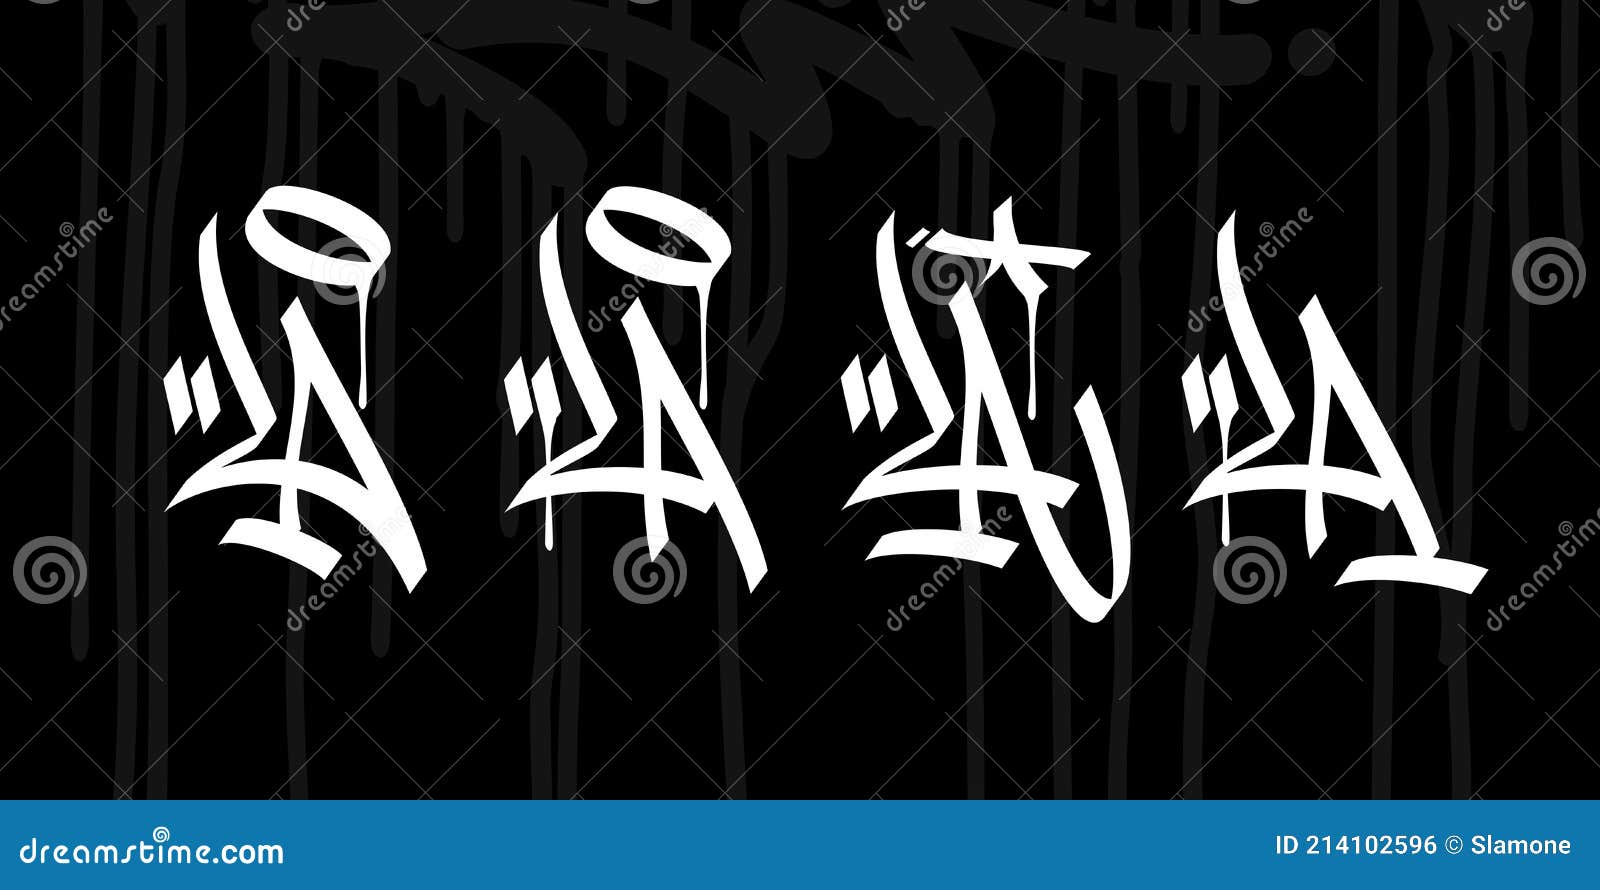 la as word los angeles abstract hip hop urban hand written graffiti style  s art